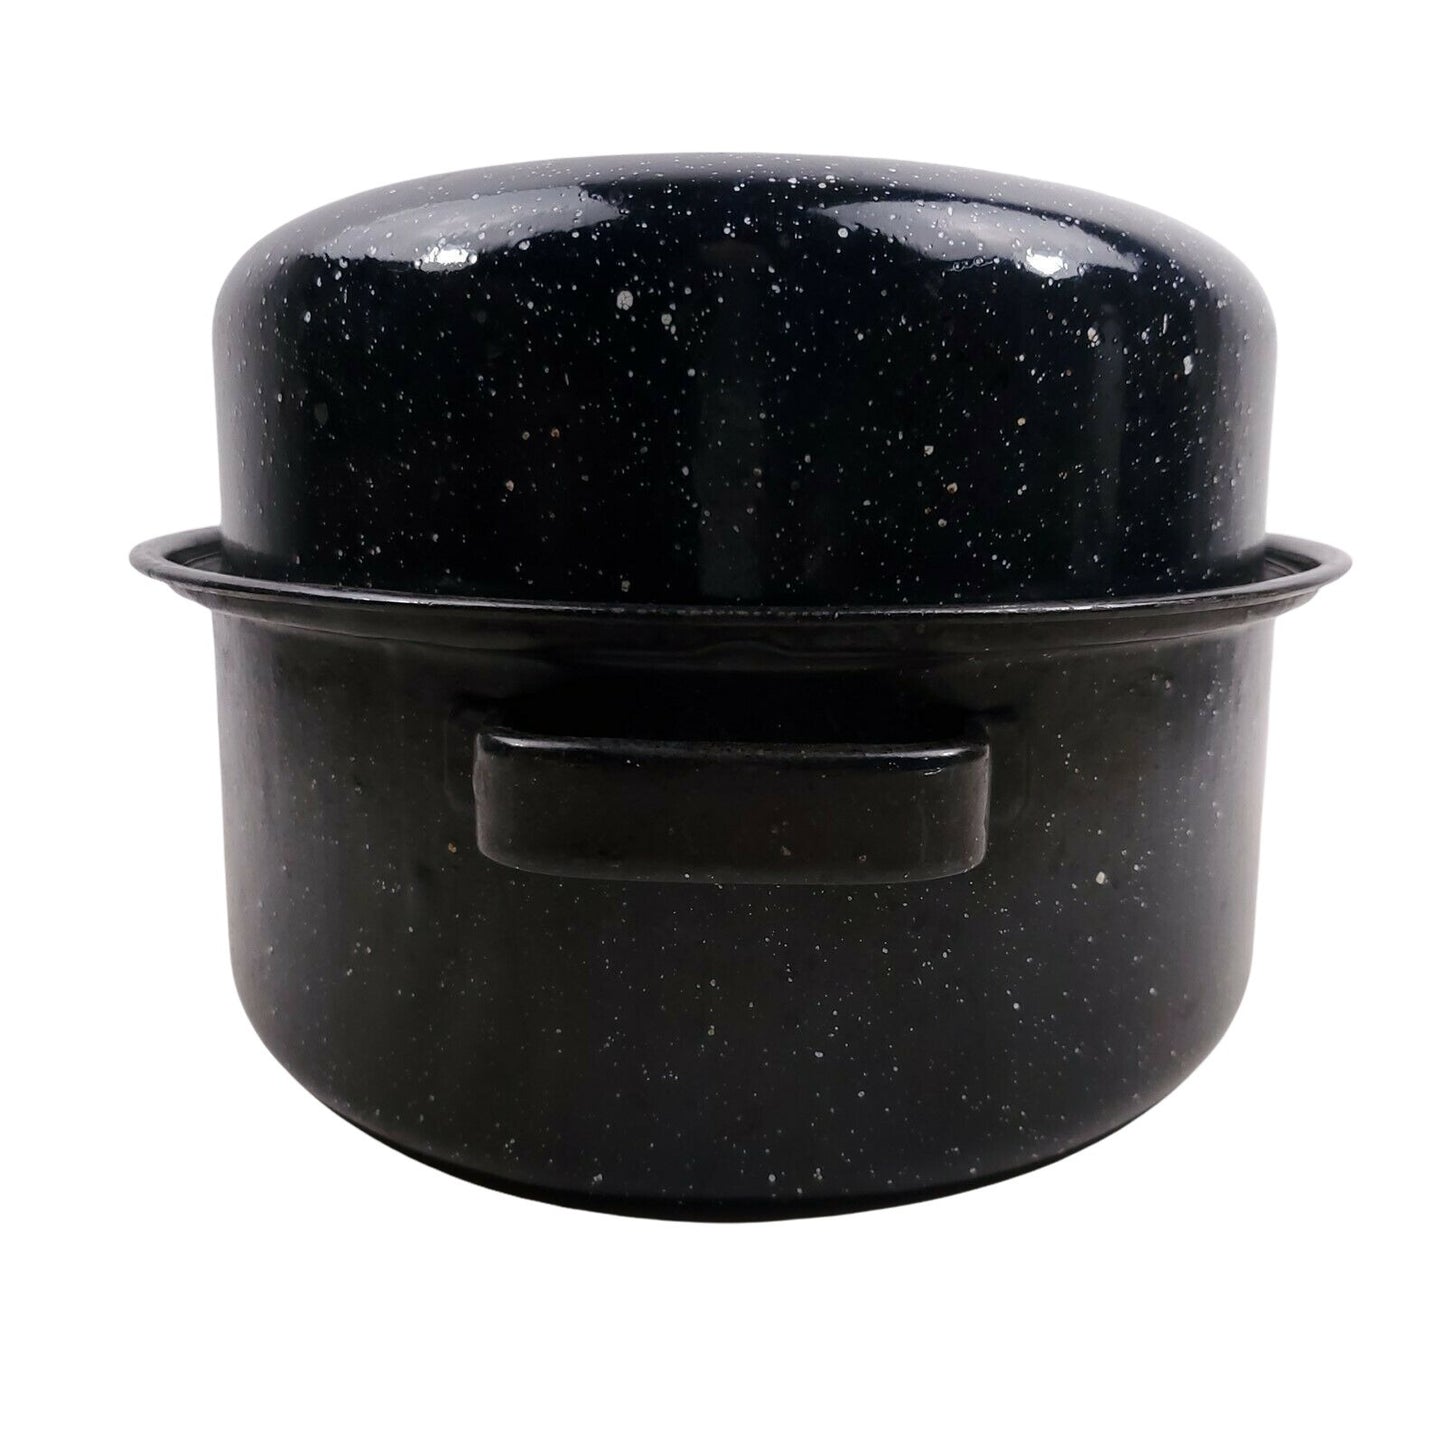 Cookware Vintage Black Speckled Oval Roasting Pan Enamelware 16.5"x12.25"x7.5"